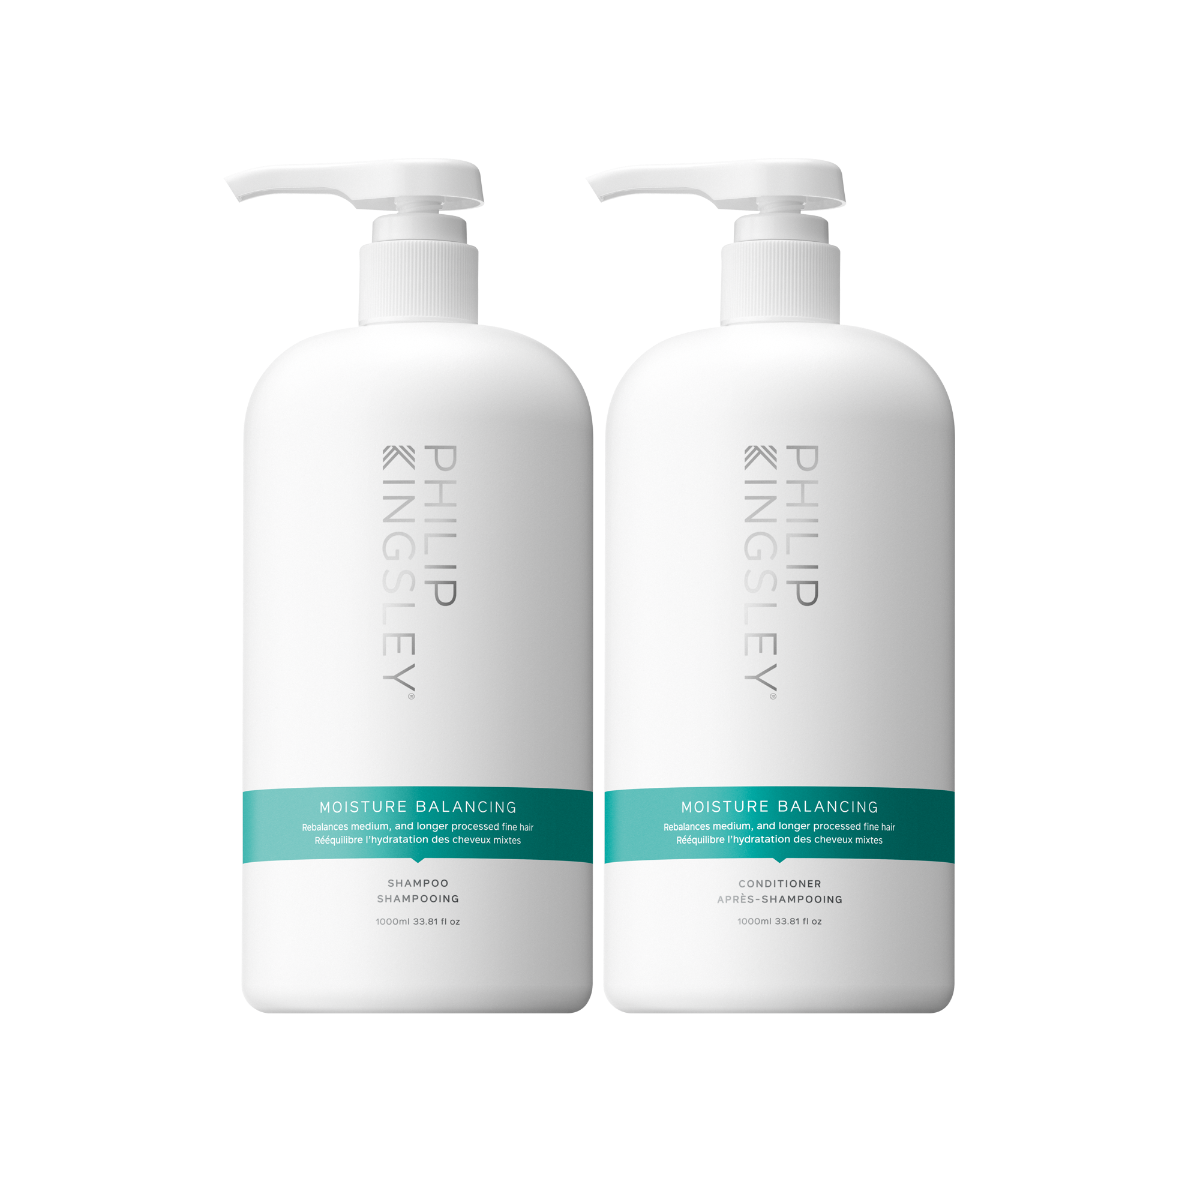 Moisture Balancing Combination Shampoo & Moisture Balancing Combination Conditioner Supersize Duo